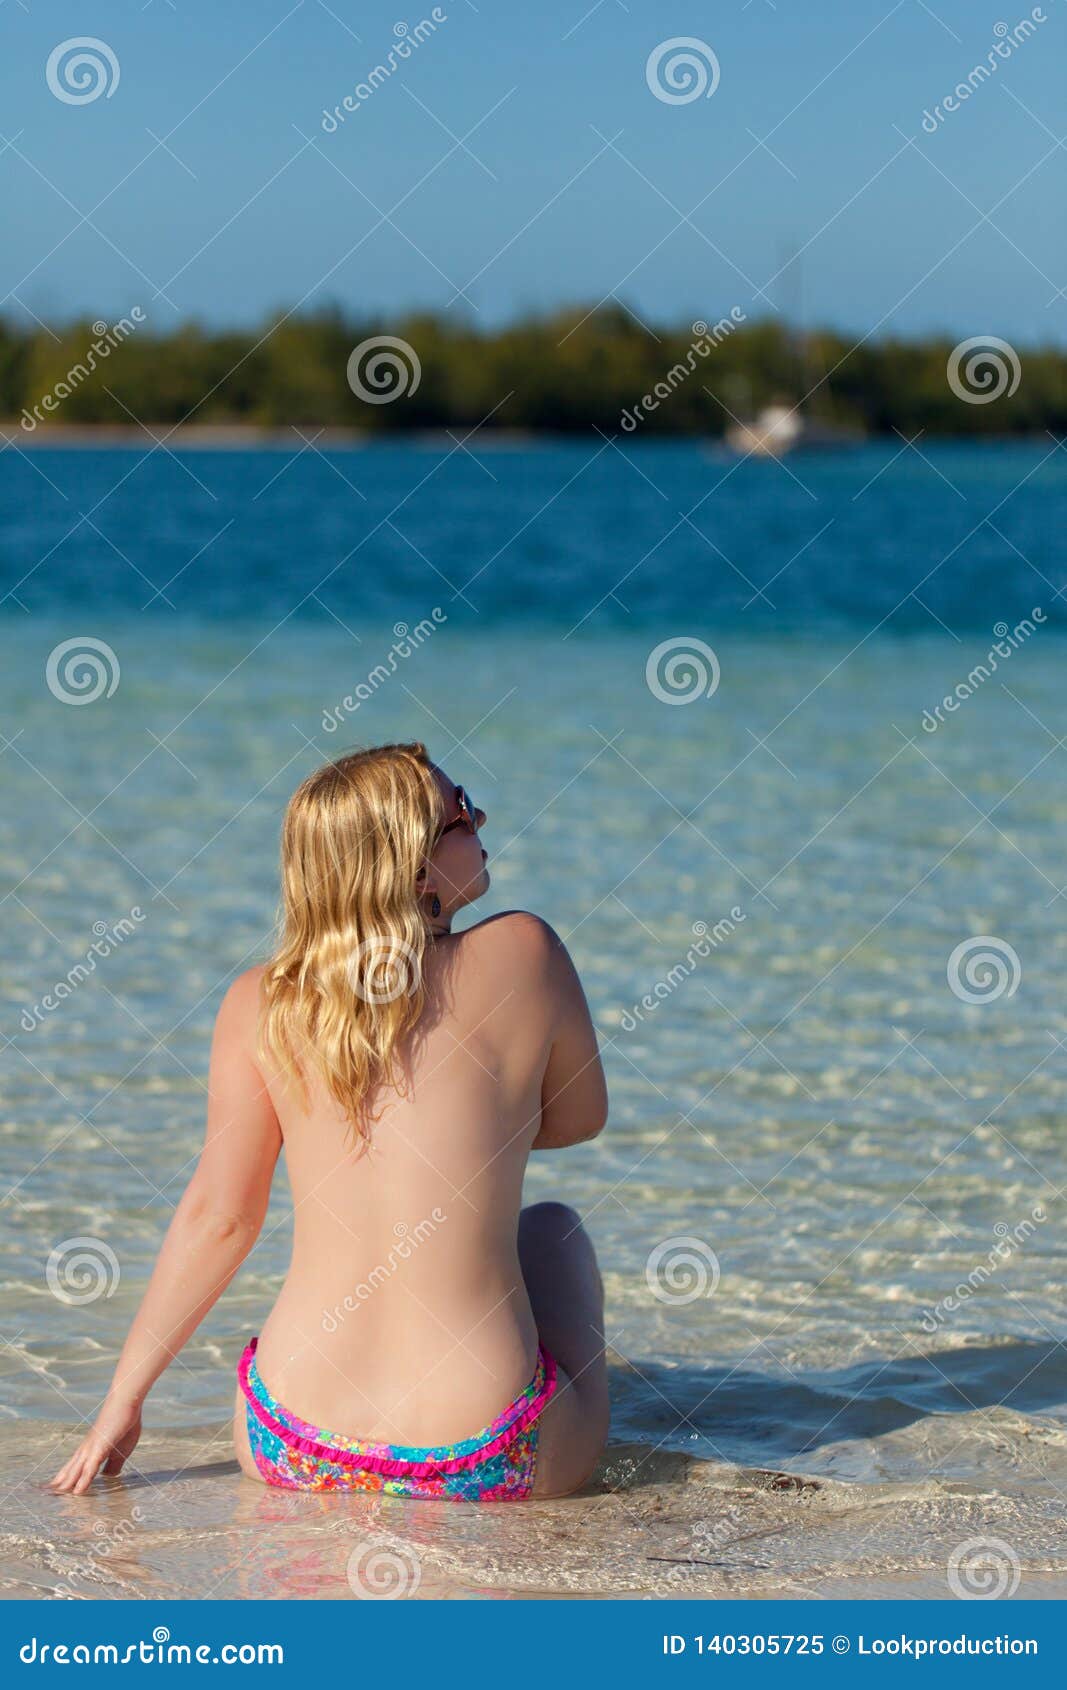 Nude beach girl